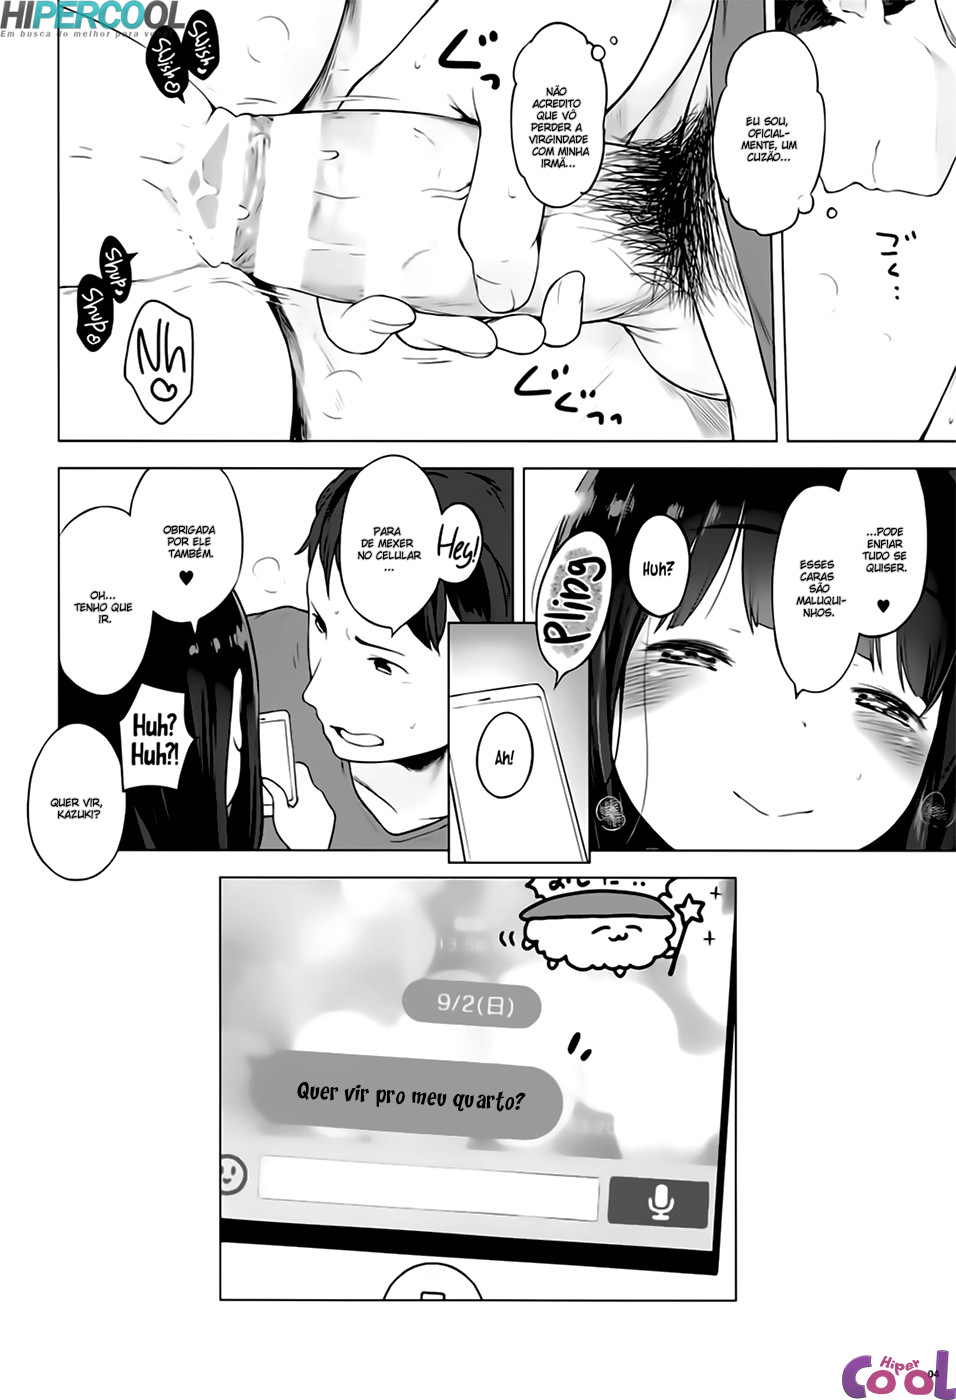 monaka-chapter-01-page-03.jpg